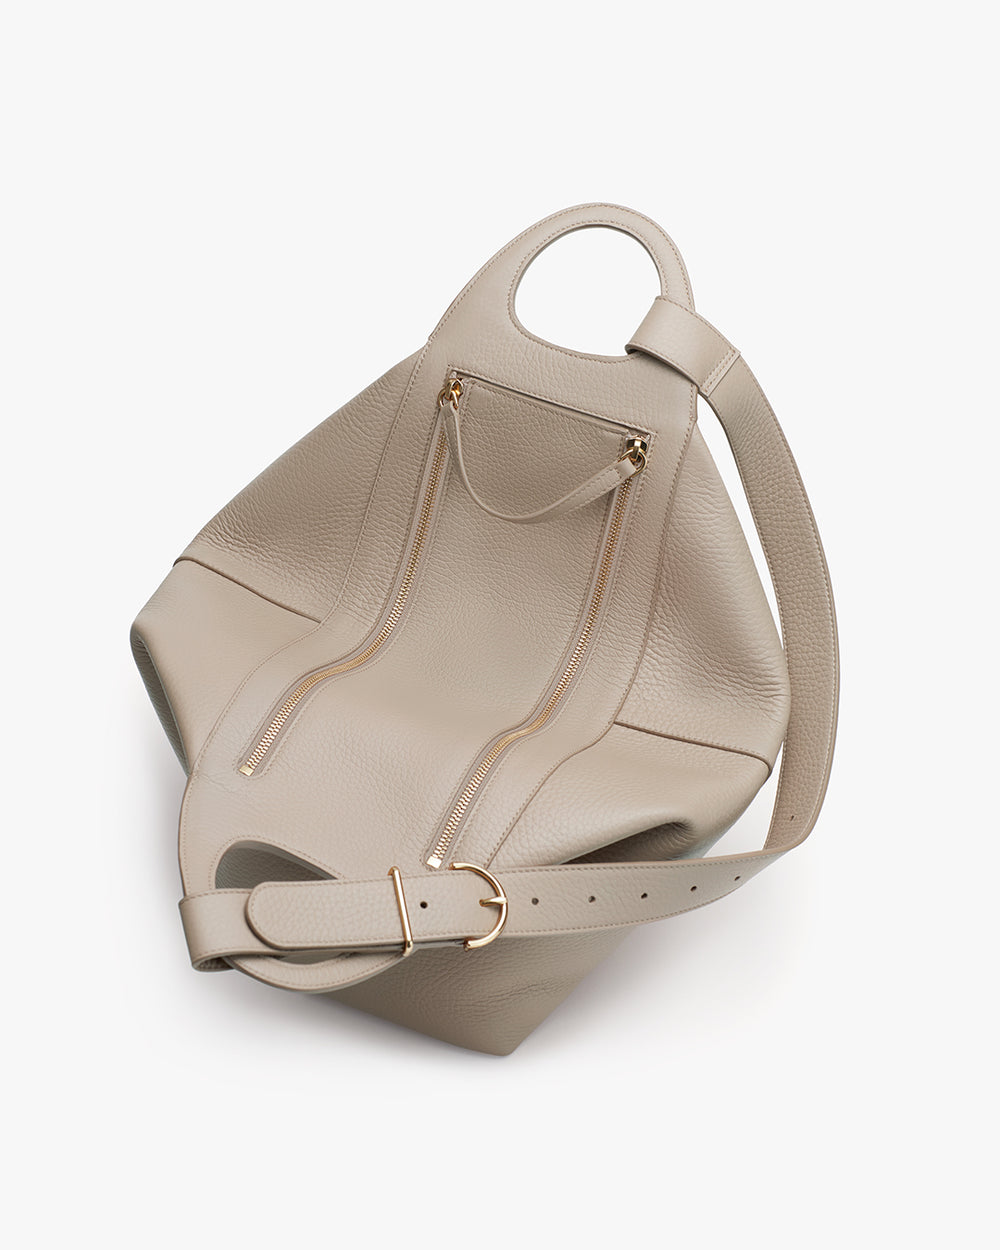 Handbag with top handle and adjustable shoulder strap.